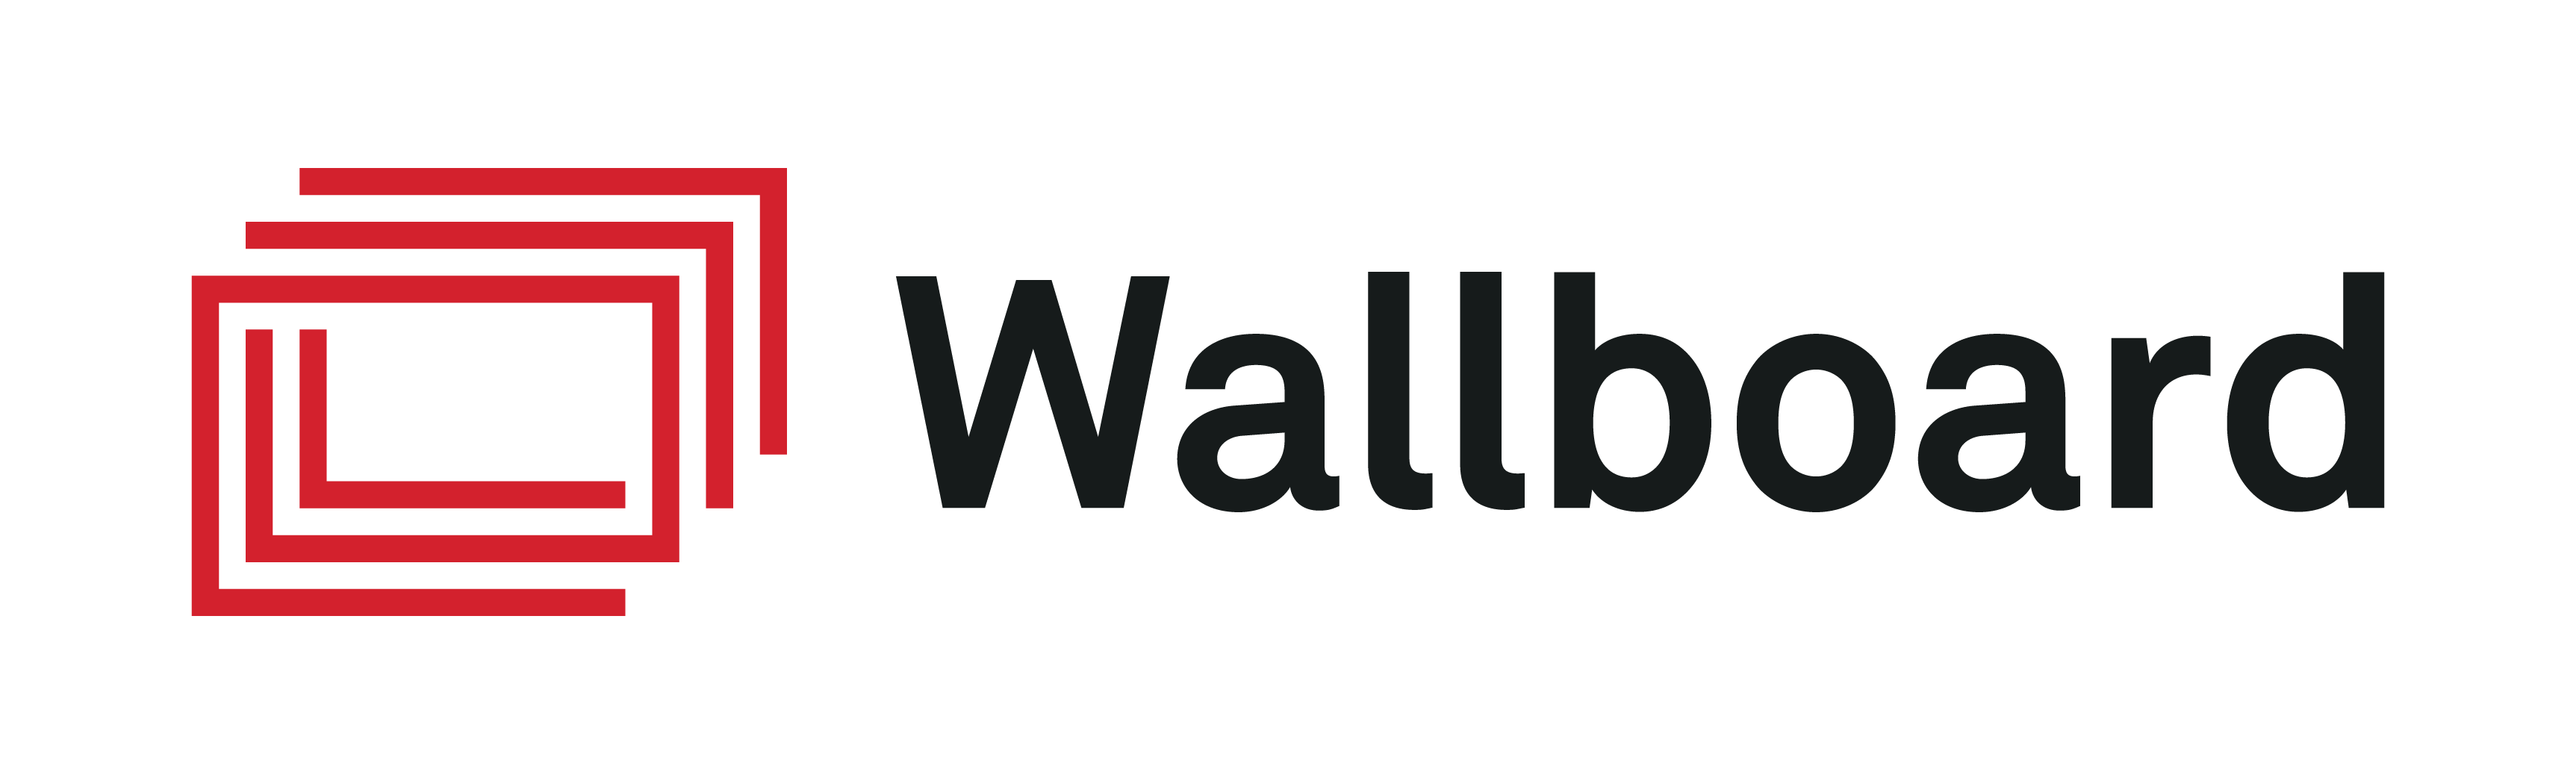 Wallboard logo